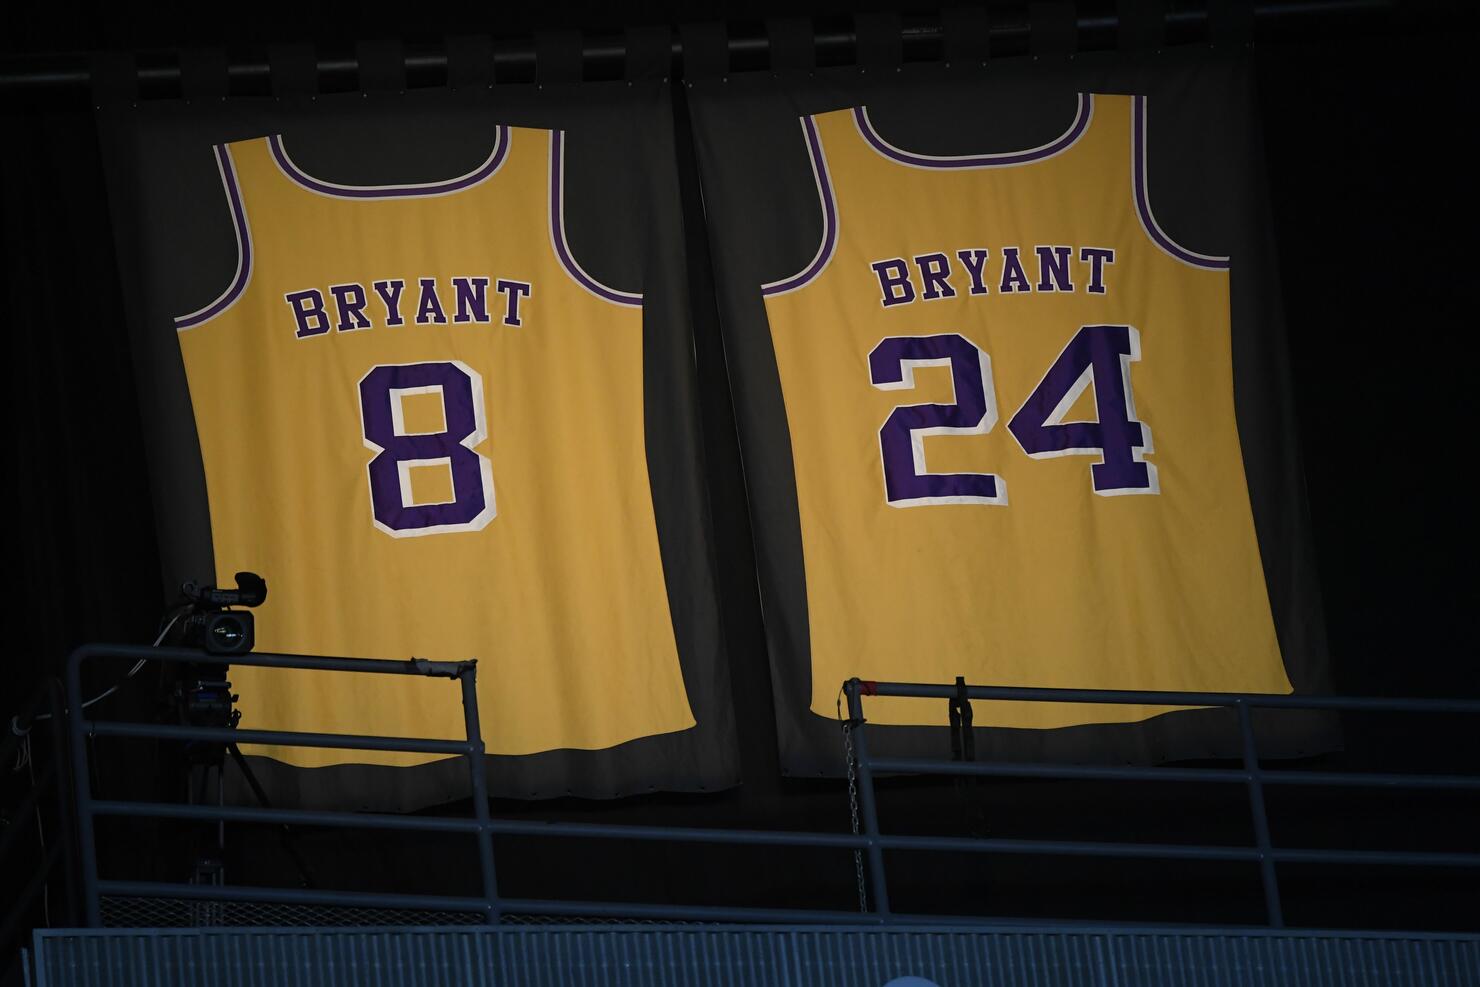 Los Angeles Remembers NBA Star Kobe Bryant